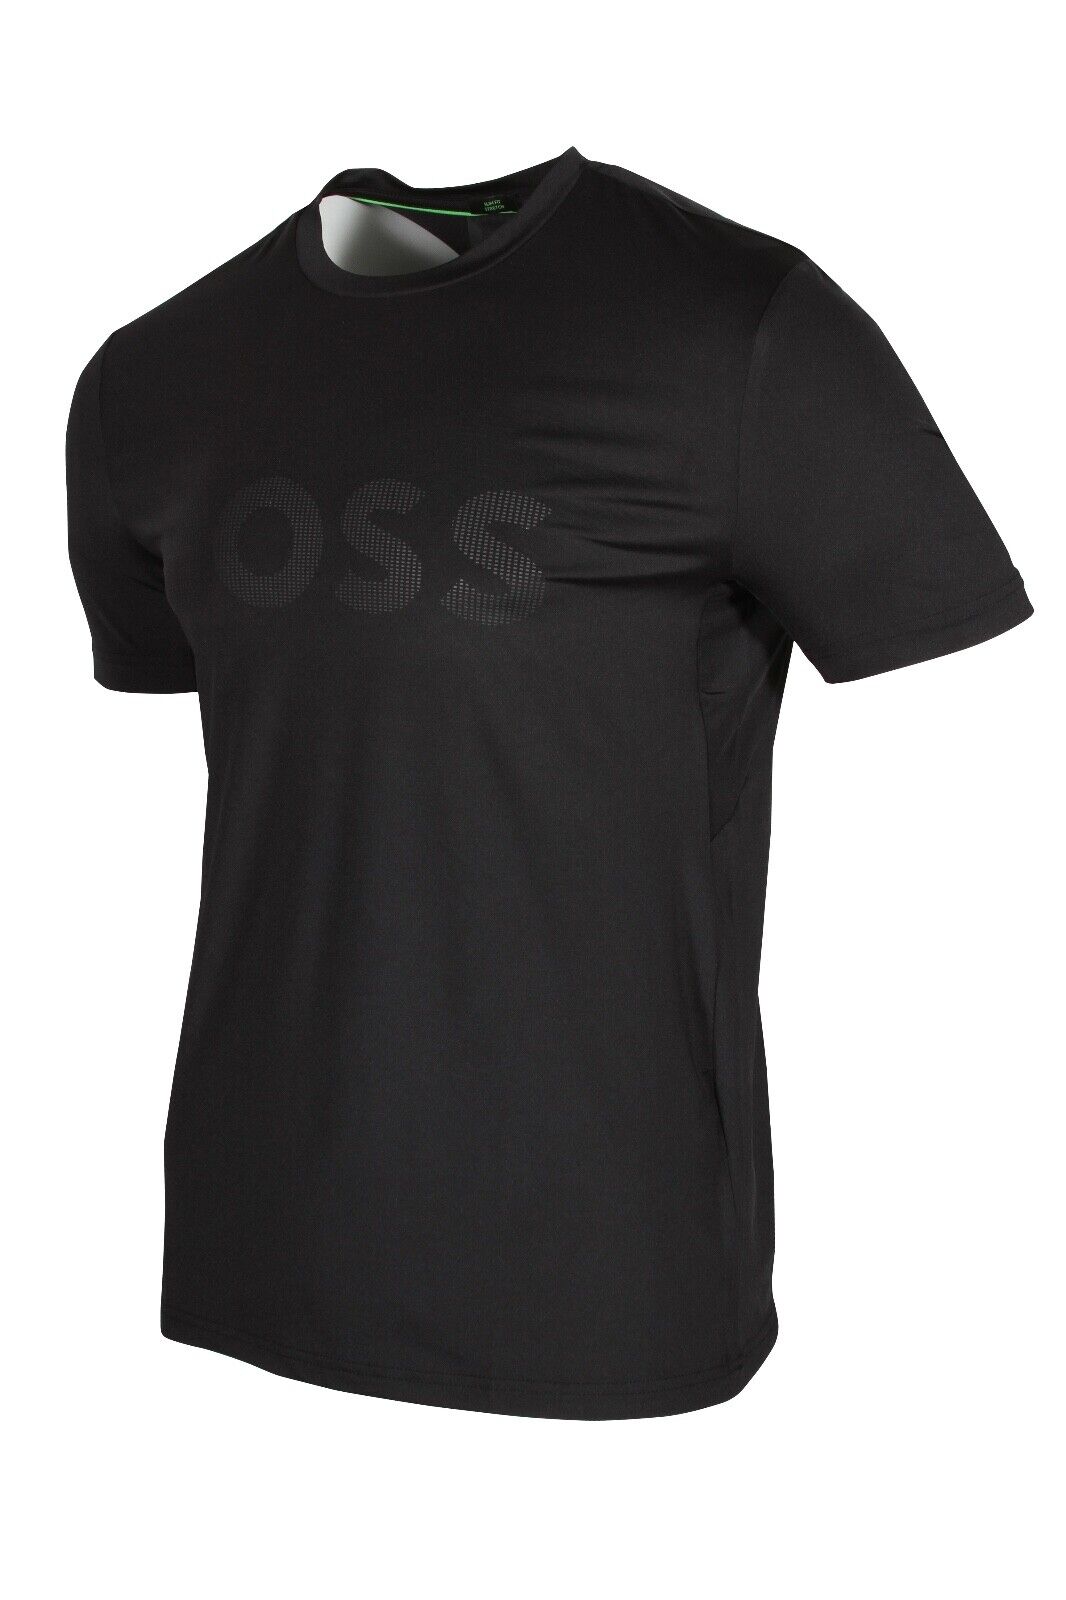 HUGO BOSS Tee Active Men’s Slim-Fit T-Shirt in Black 50494339-001